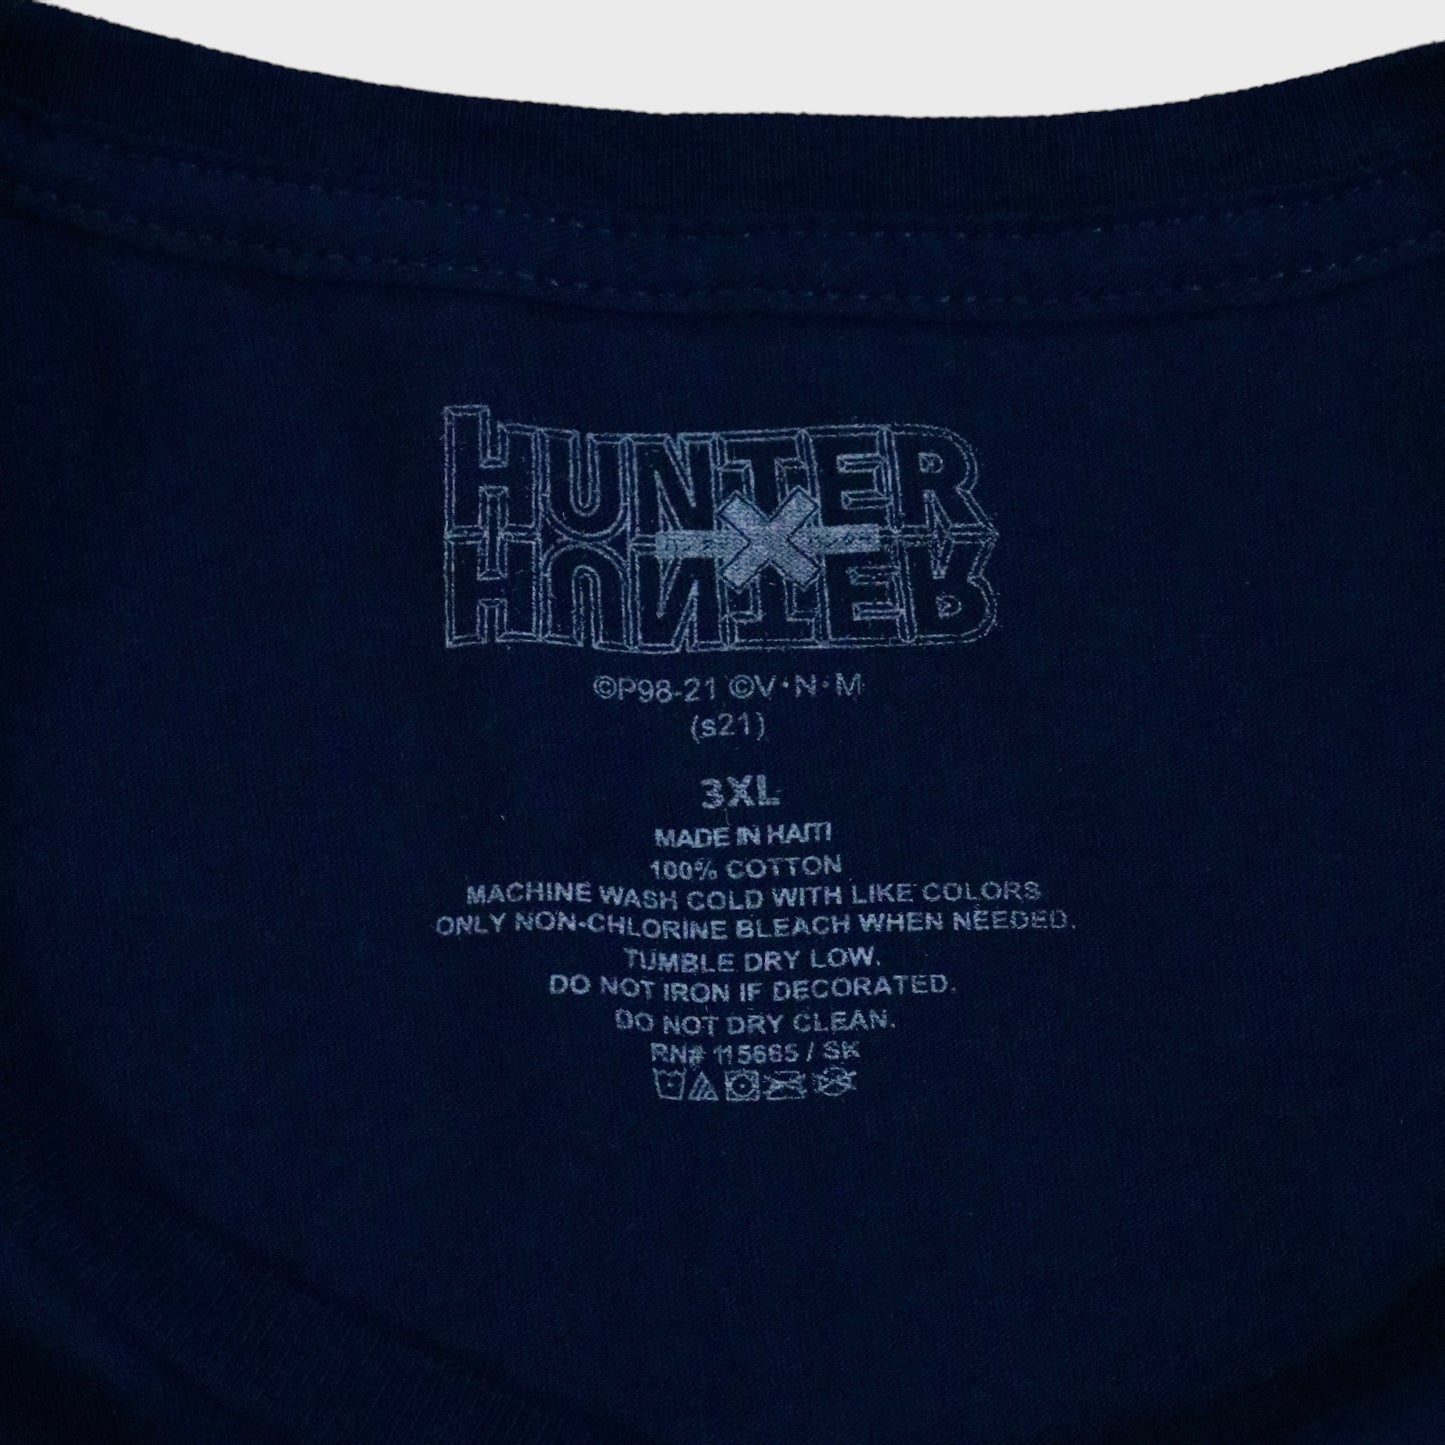 00's "HUNTERHUNTER" Character t-shirt